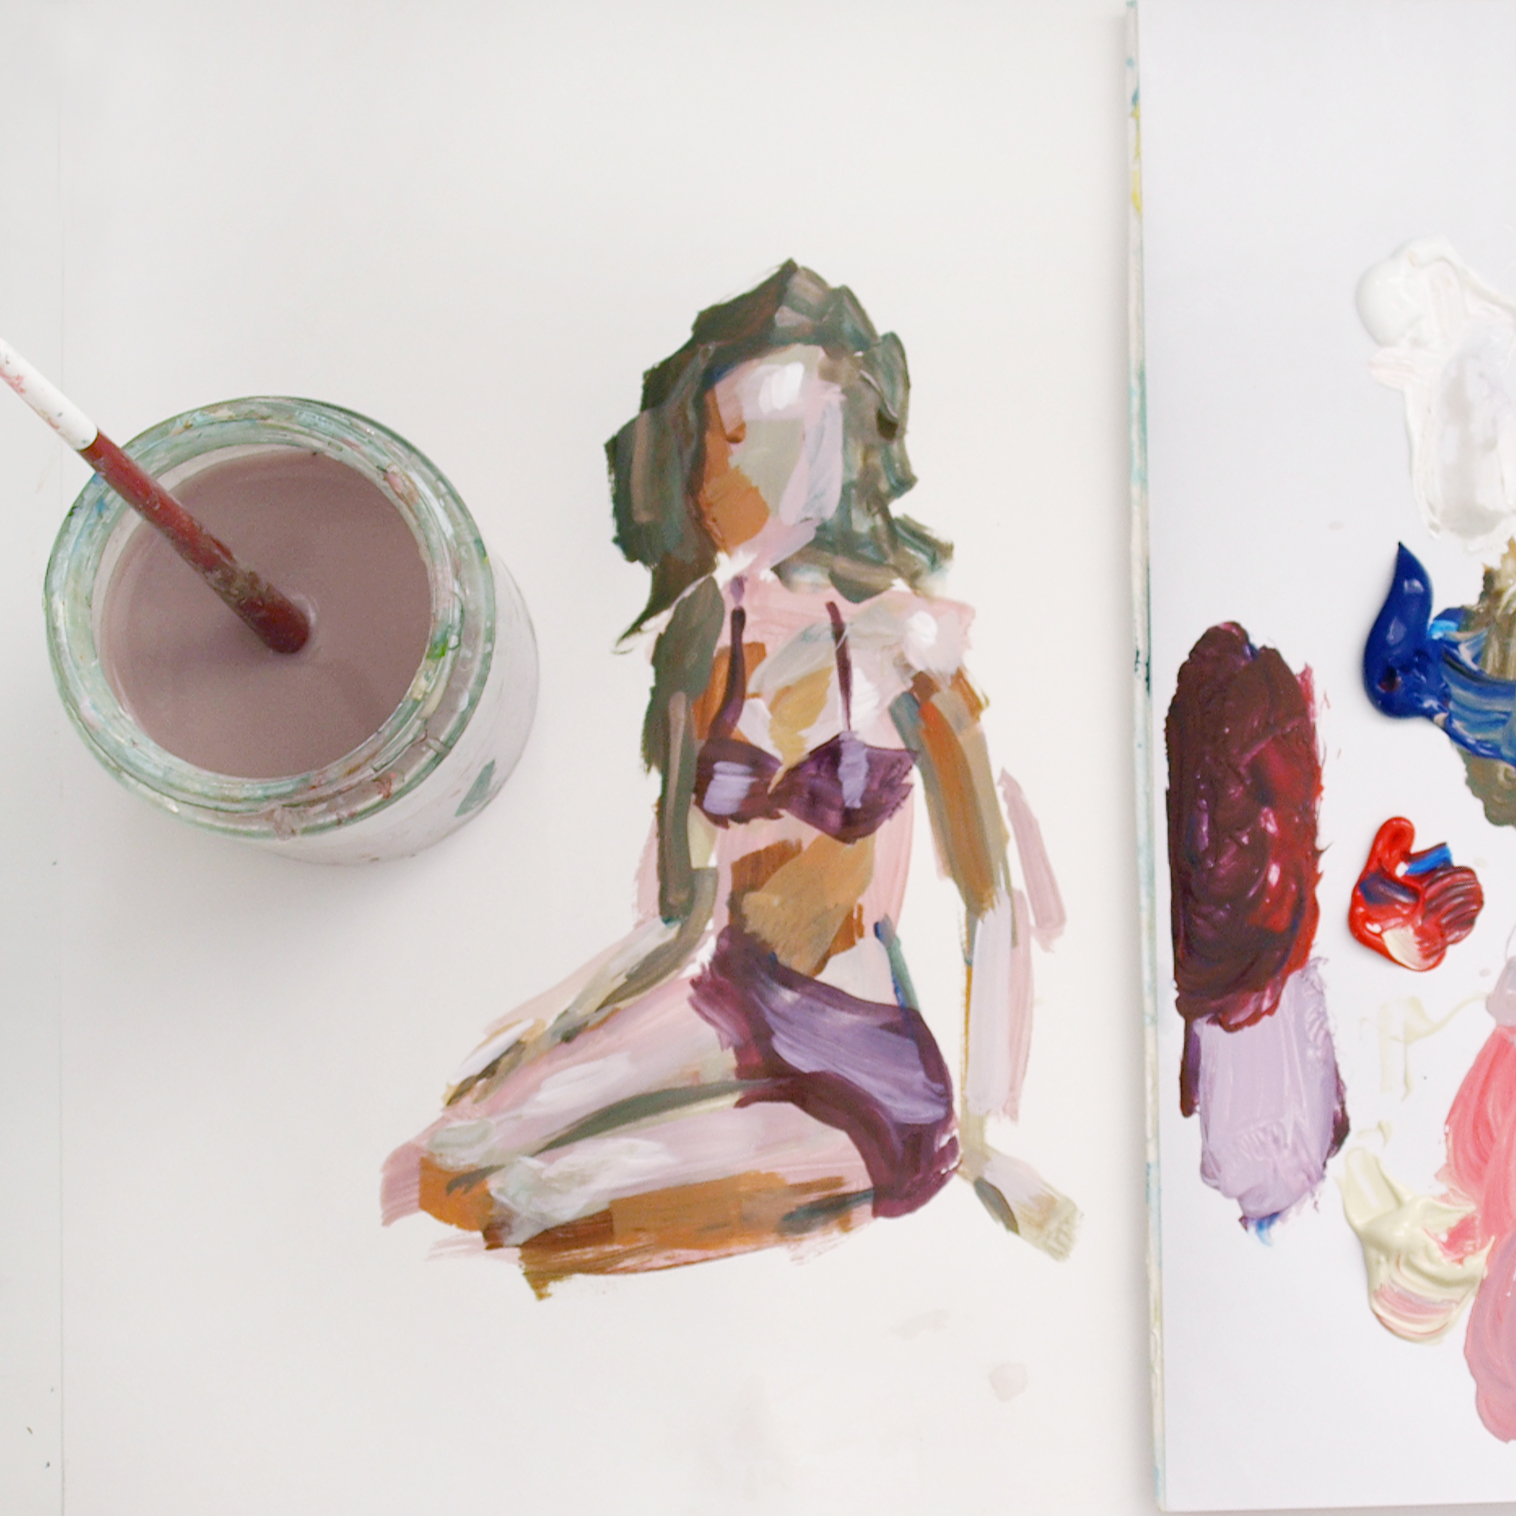 DIY: Paint a beach babe! — Katie Jobling